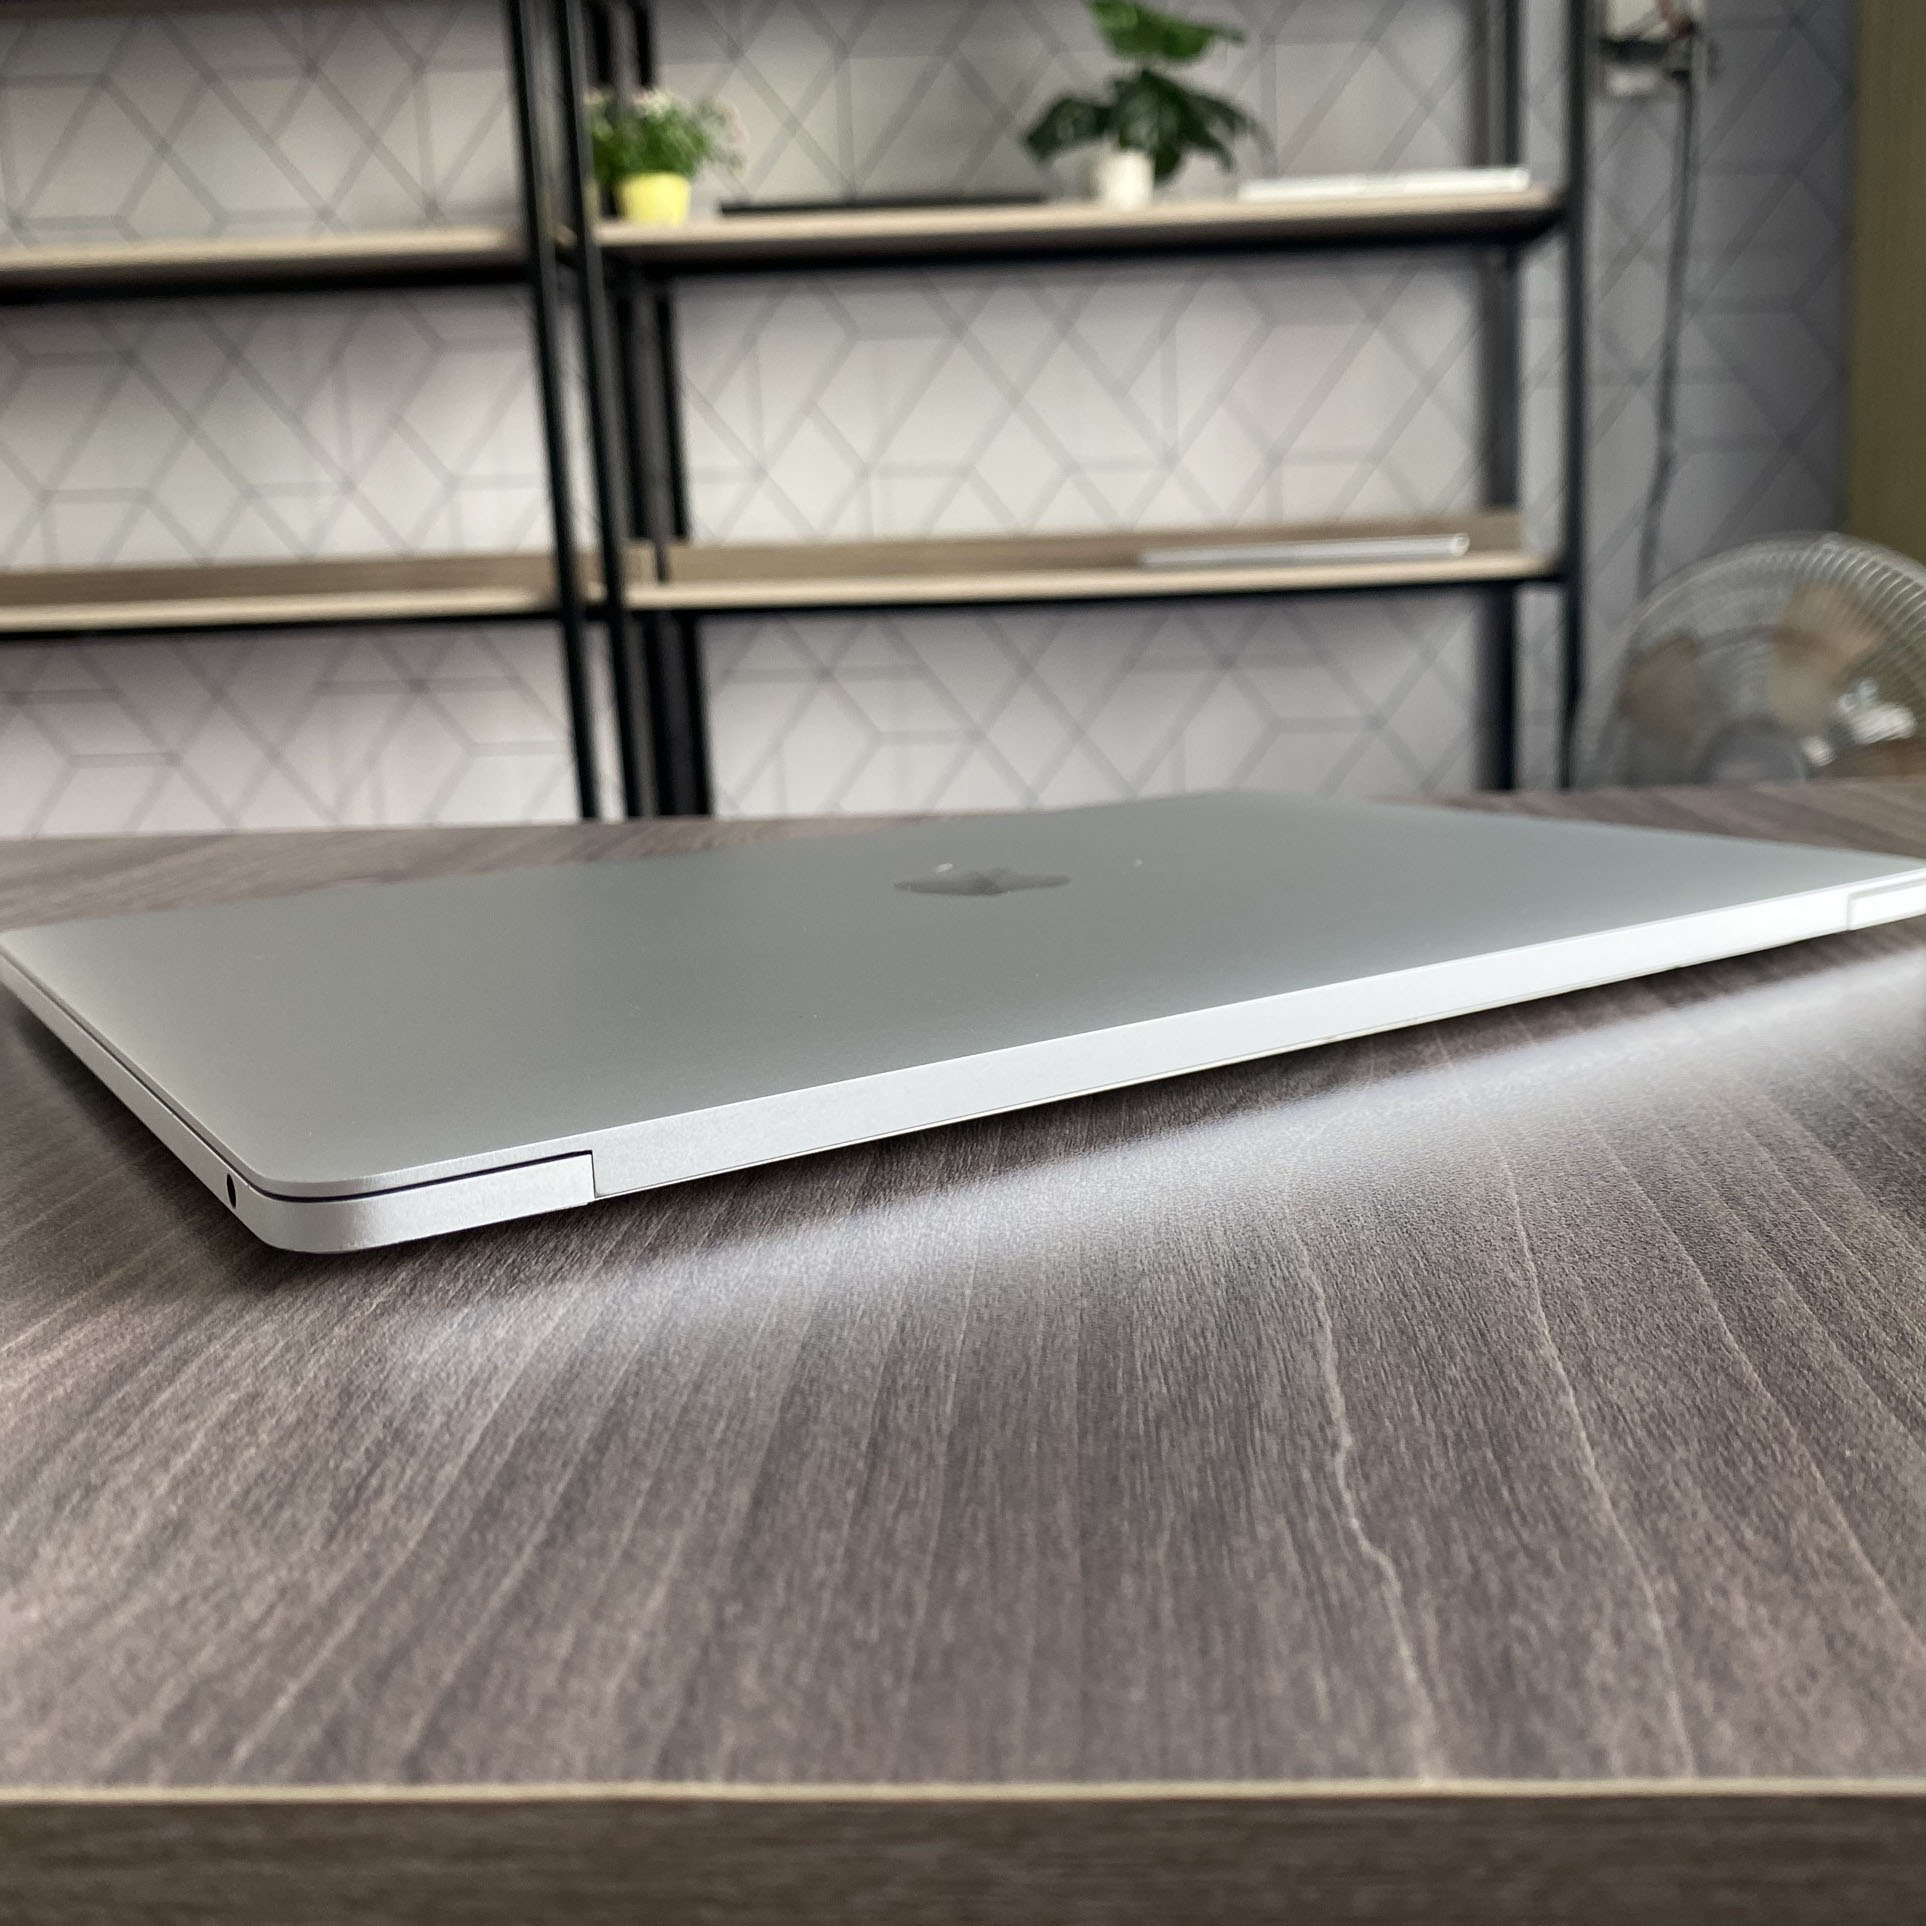 MacBook Pro (13-inch, 2017, Two Thunderbolt 3 ports) Core i5